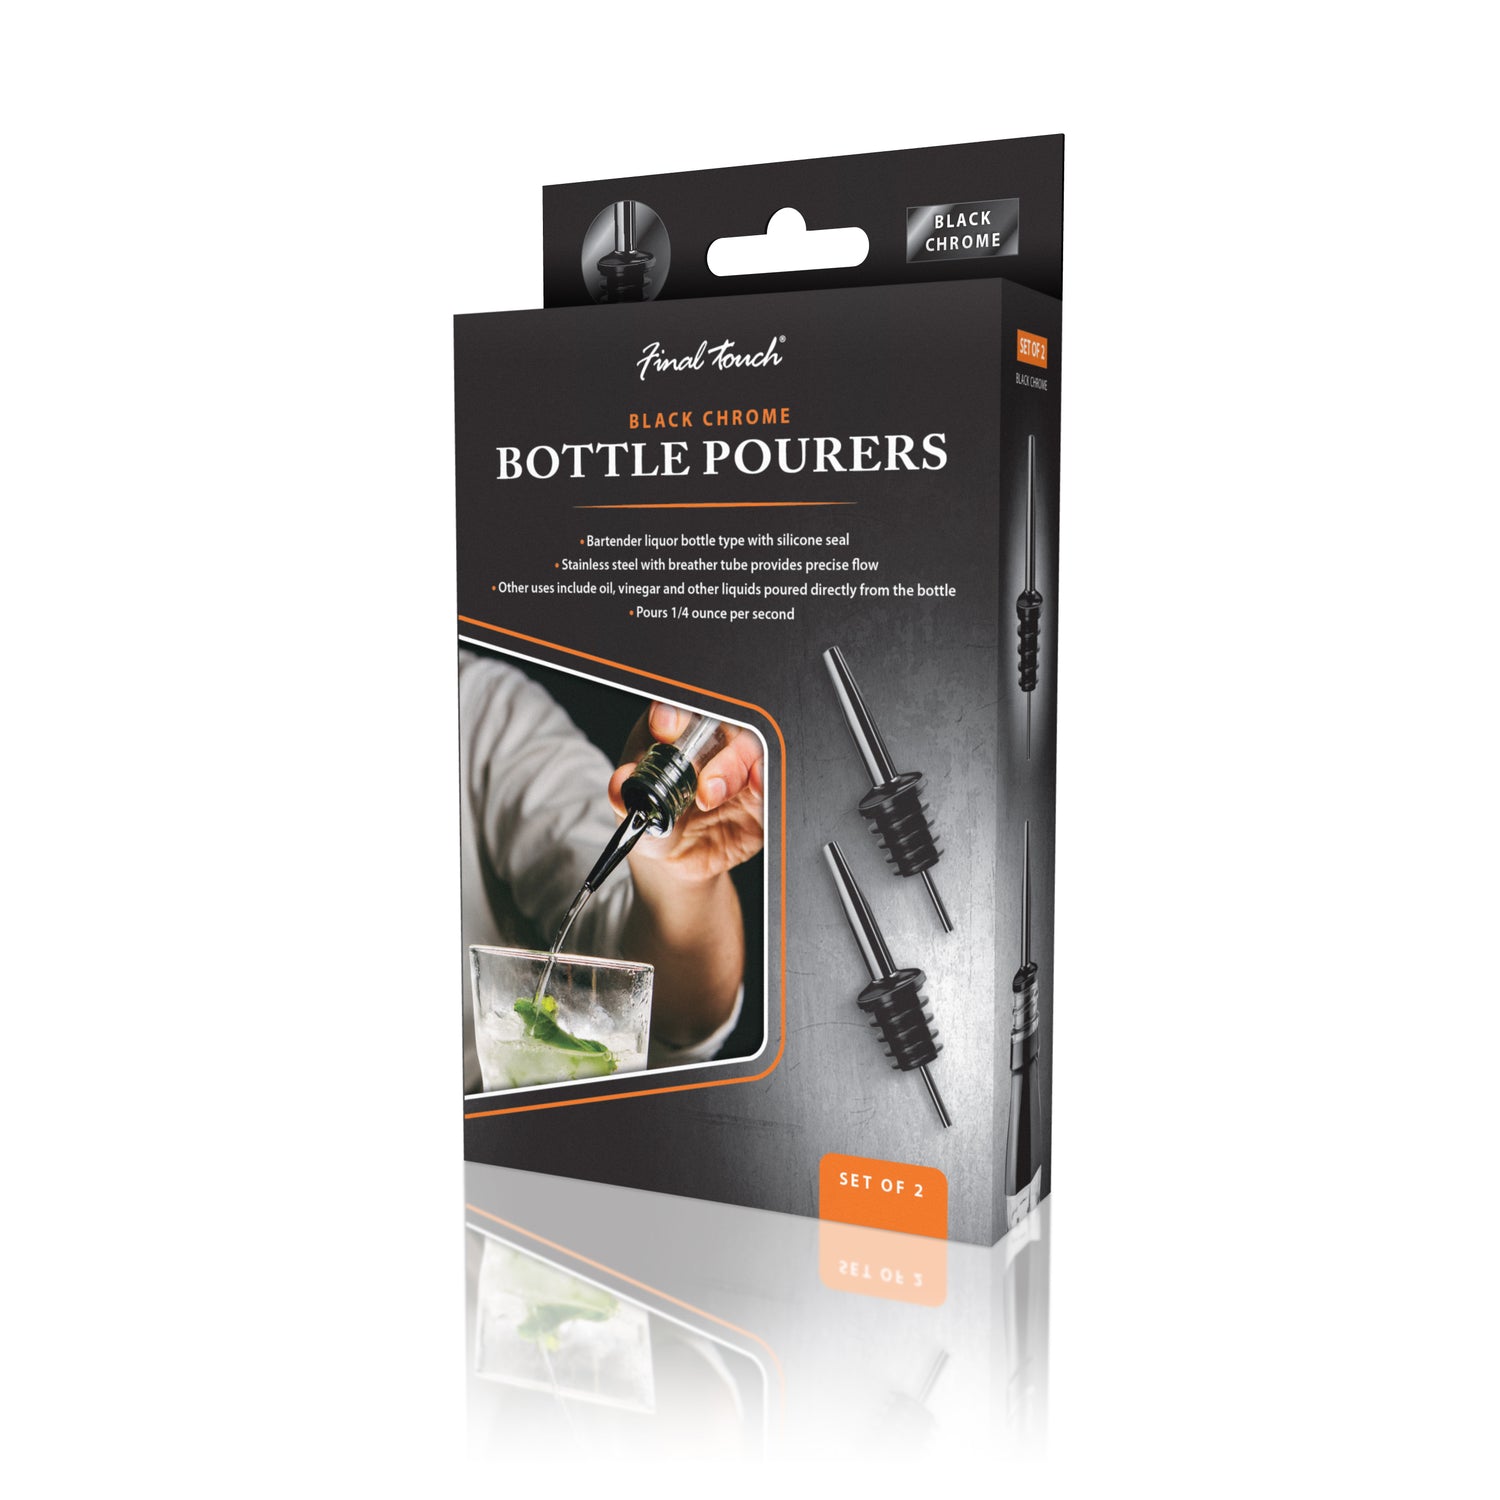 Liquor Bottle Pourers - Black Chrome Finish - Set of 2